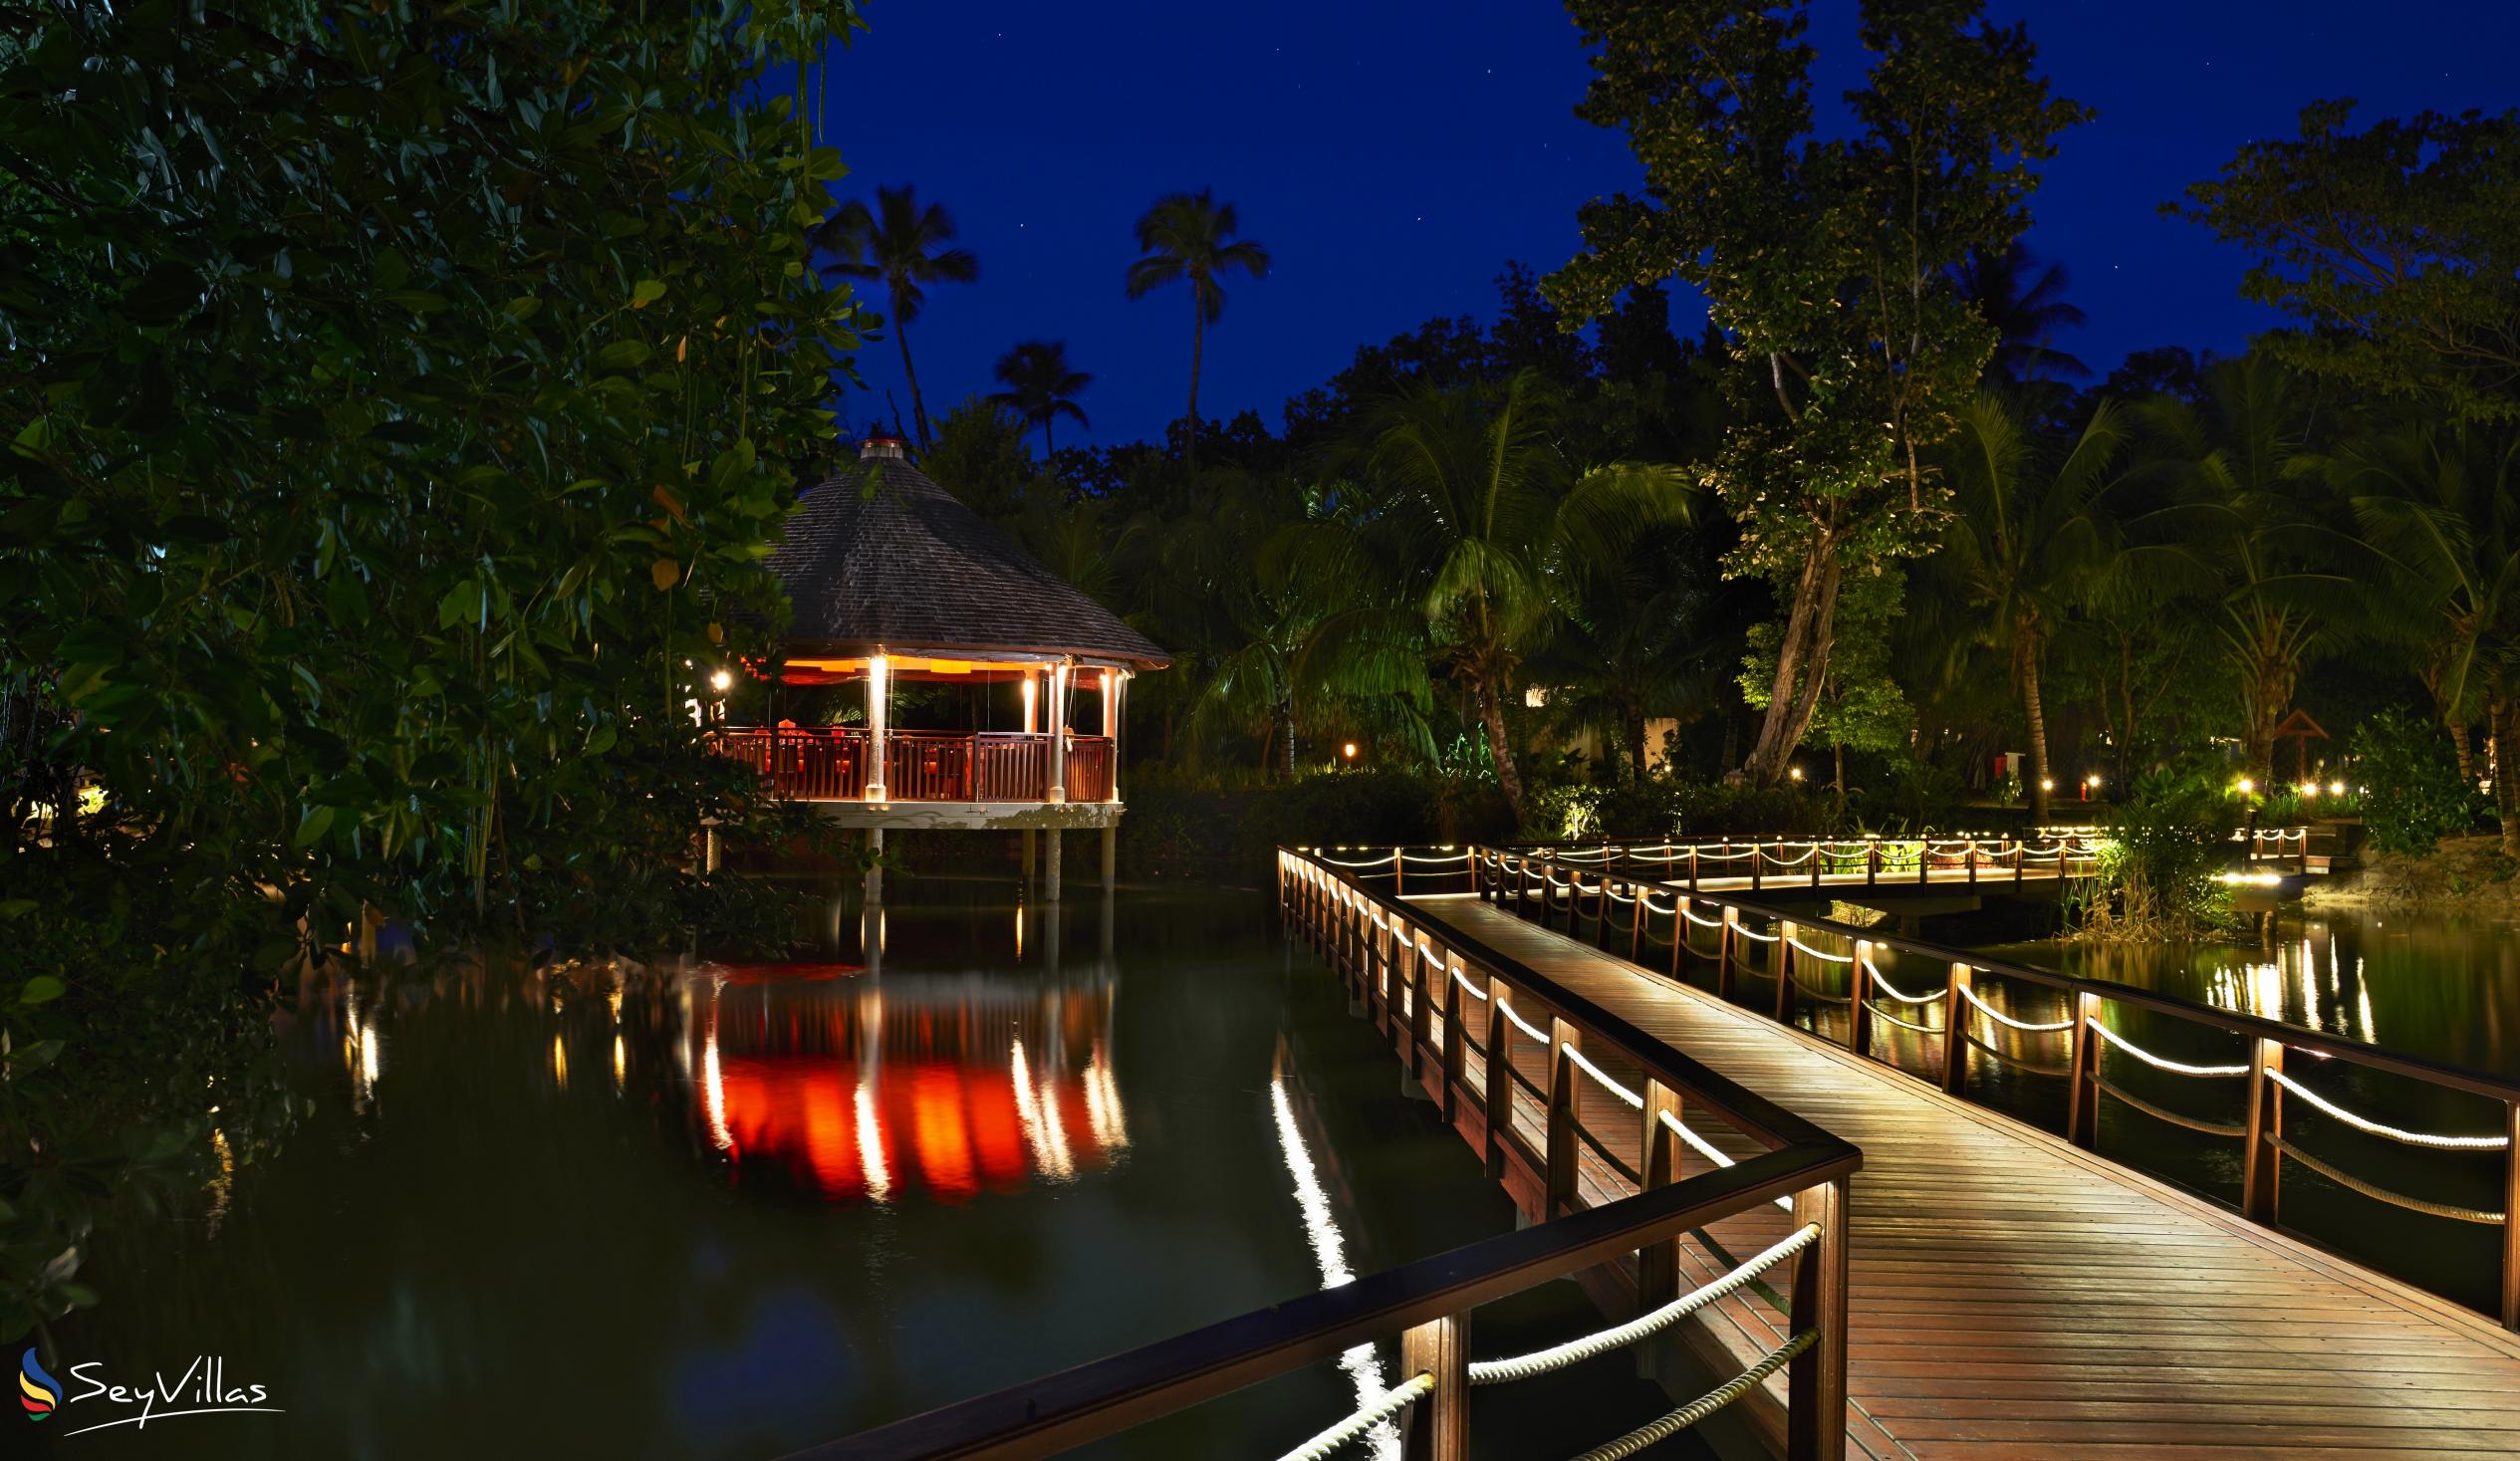 Photo 12: Hilton Seychelles Labriz Resort & Spa - Outdoor area - Silhouette Island (Seychelles)